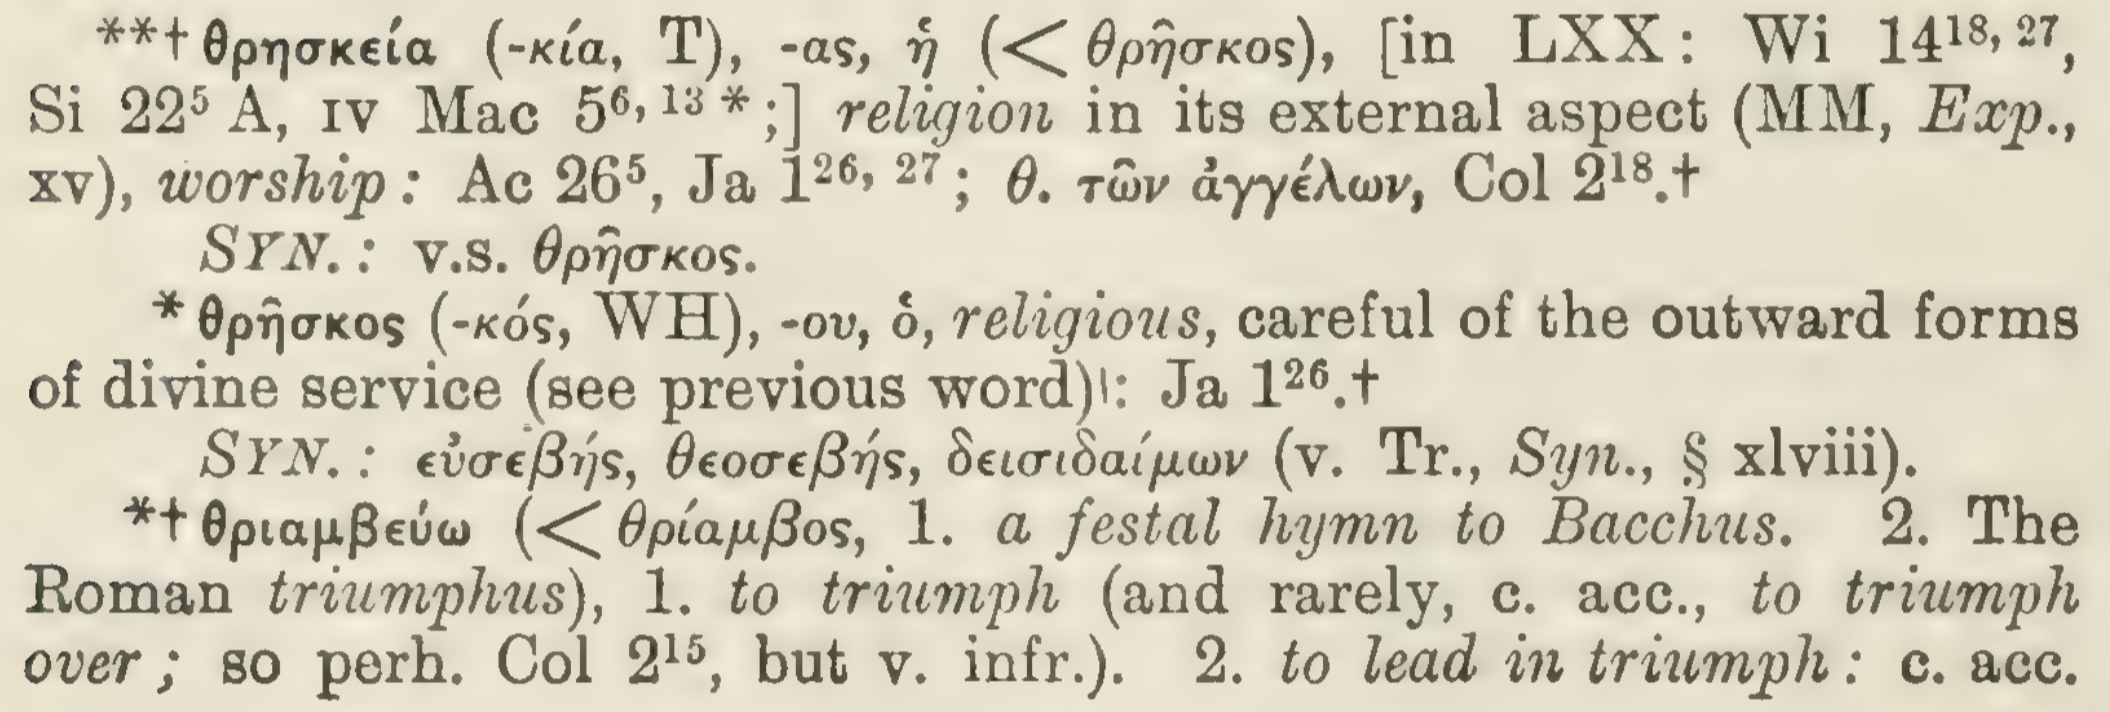 Codex bibliques et mot "religion" Ke1n